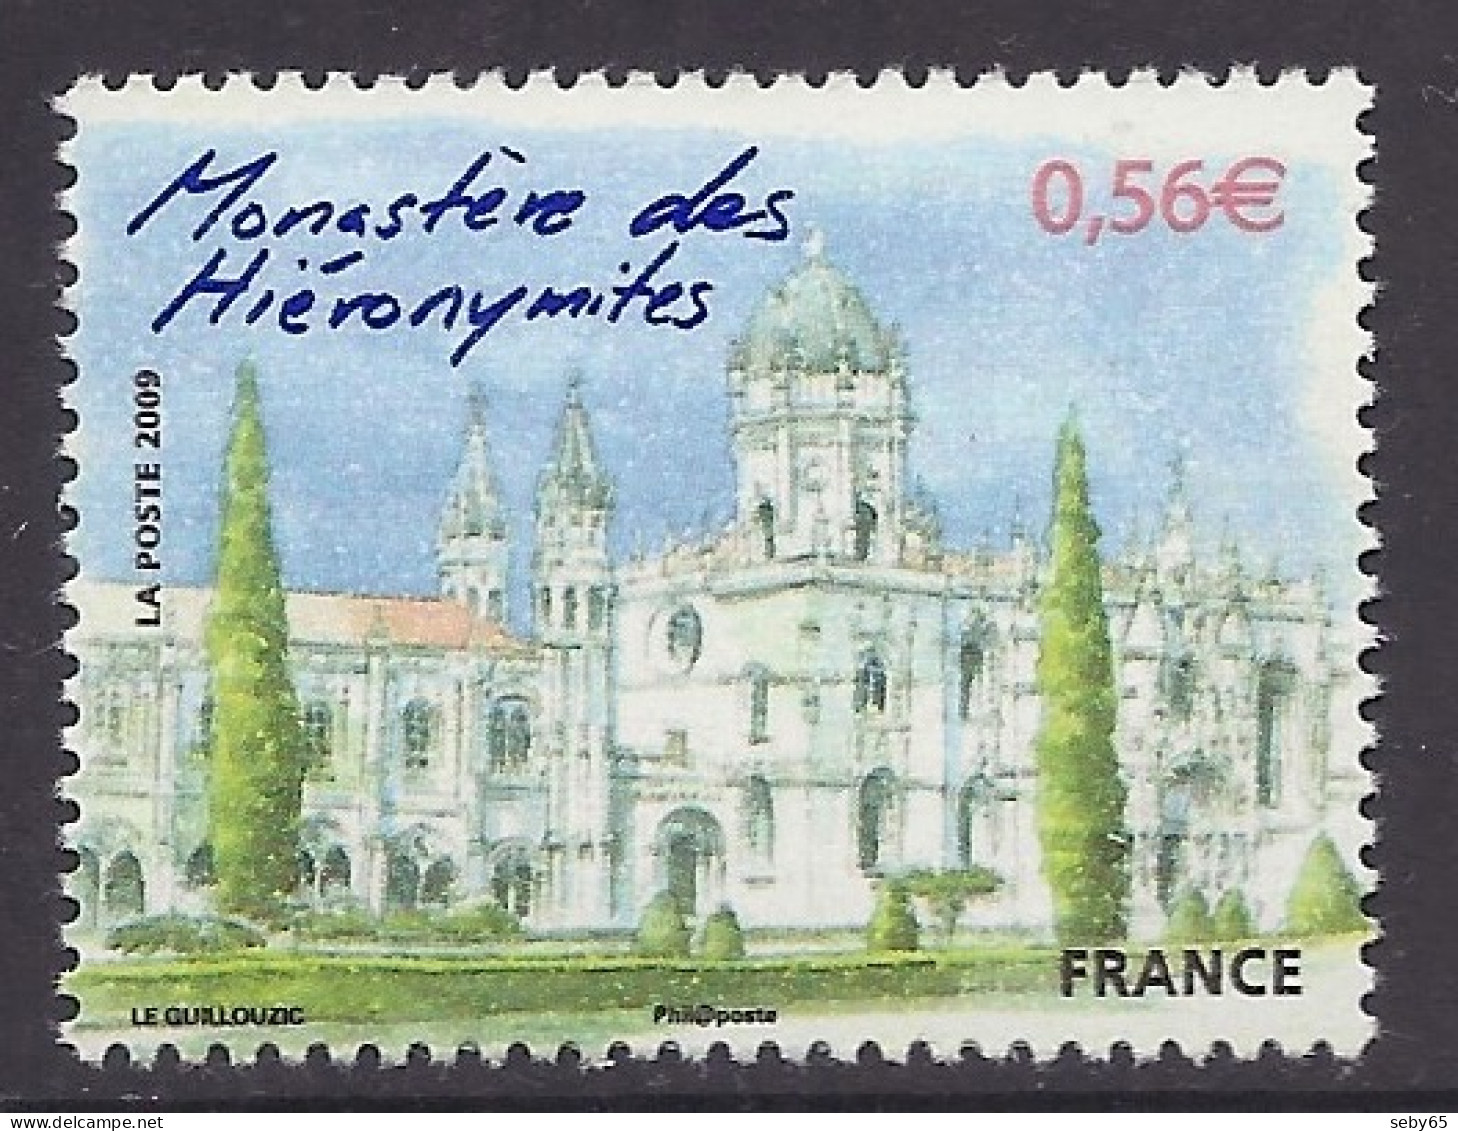 France 2009 - Capitales Européennes, Lisbonne, Lisboa, Lisbona, European Capitals, Monastery Of Hieronymites - MNH - Ongebruikt